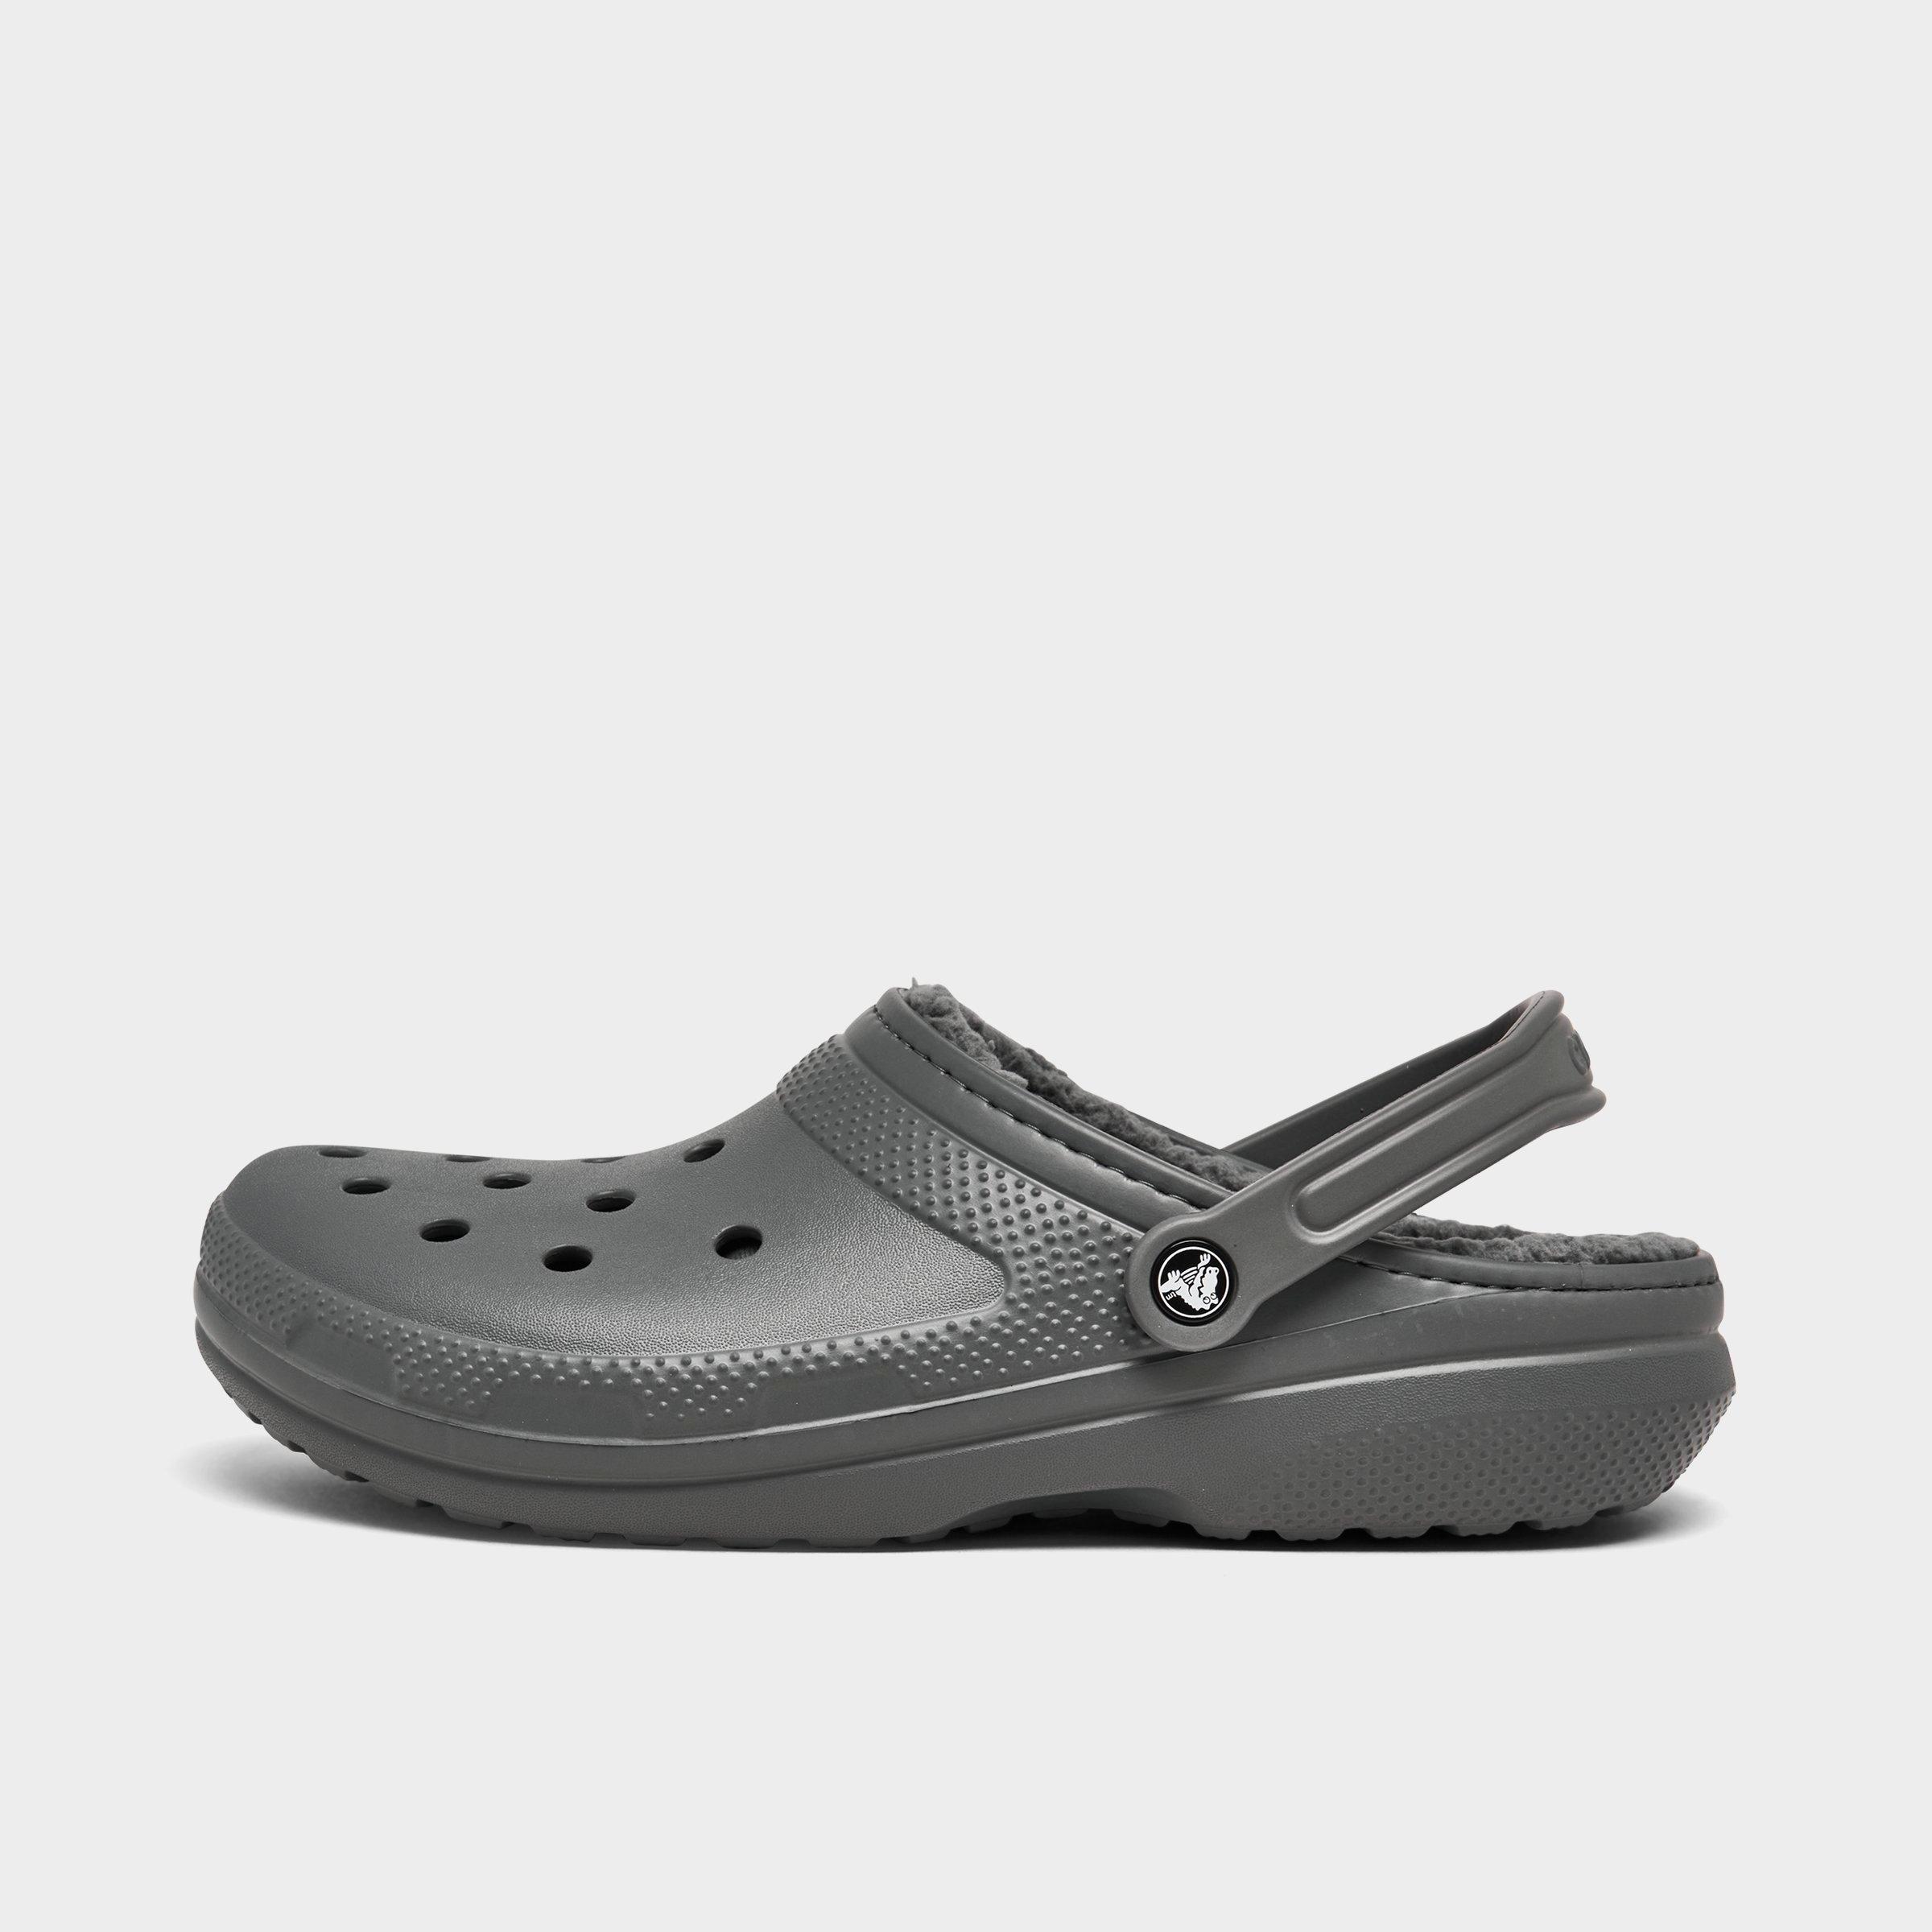 crocs sports shoes